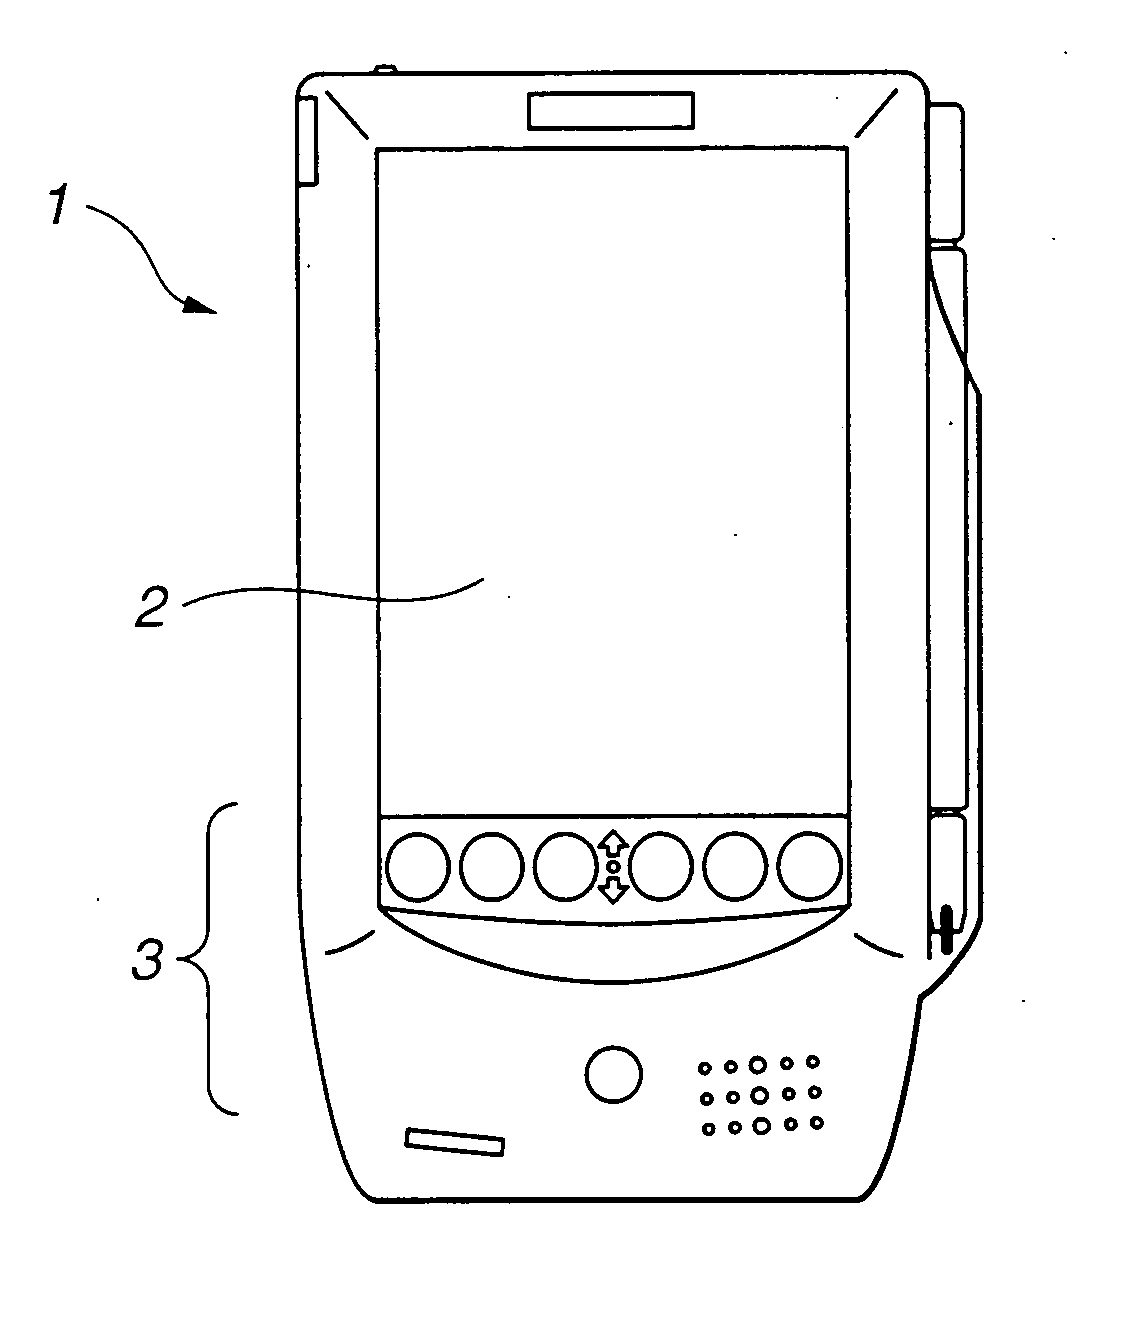 Mobile information terminal apparatus